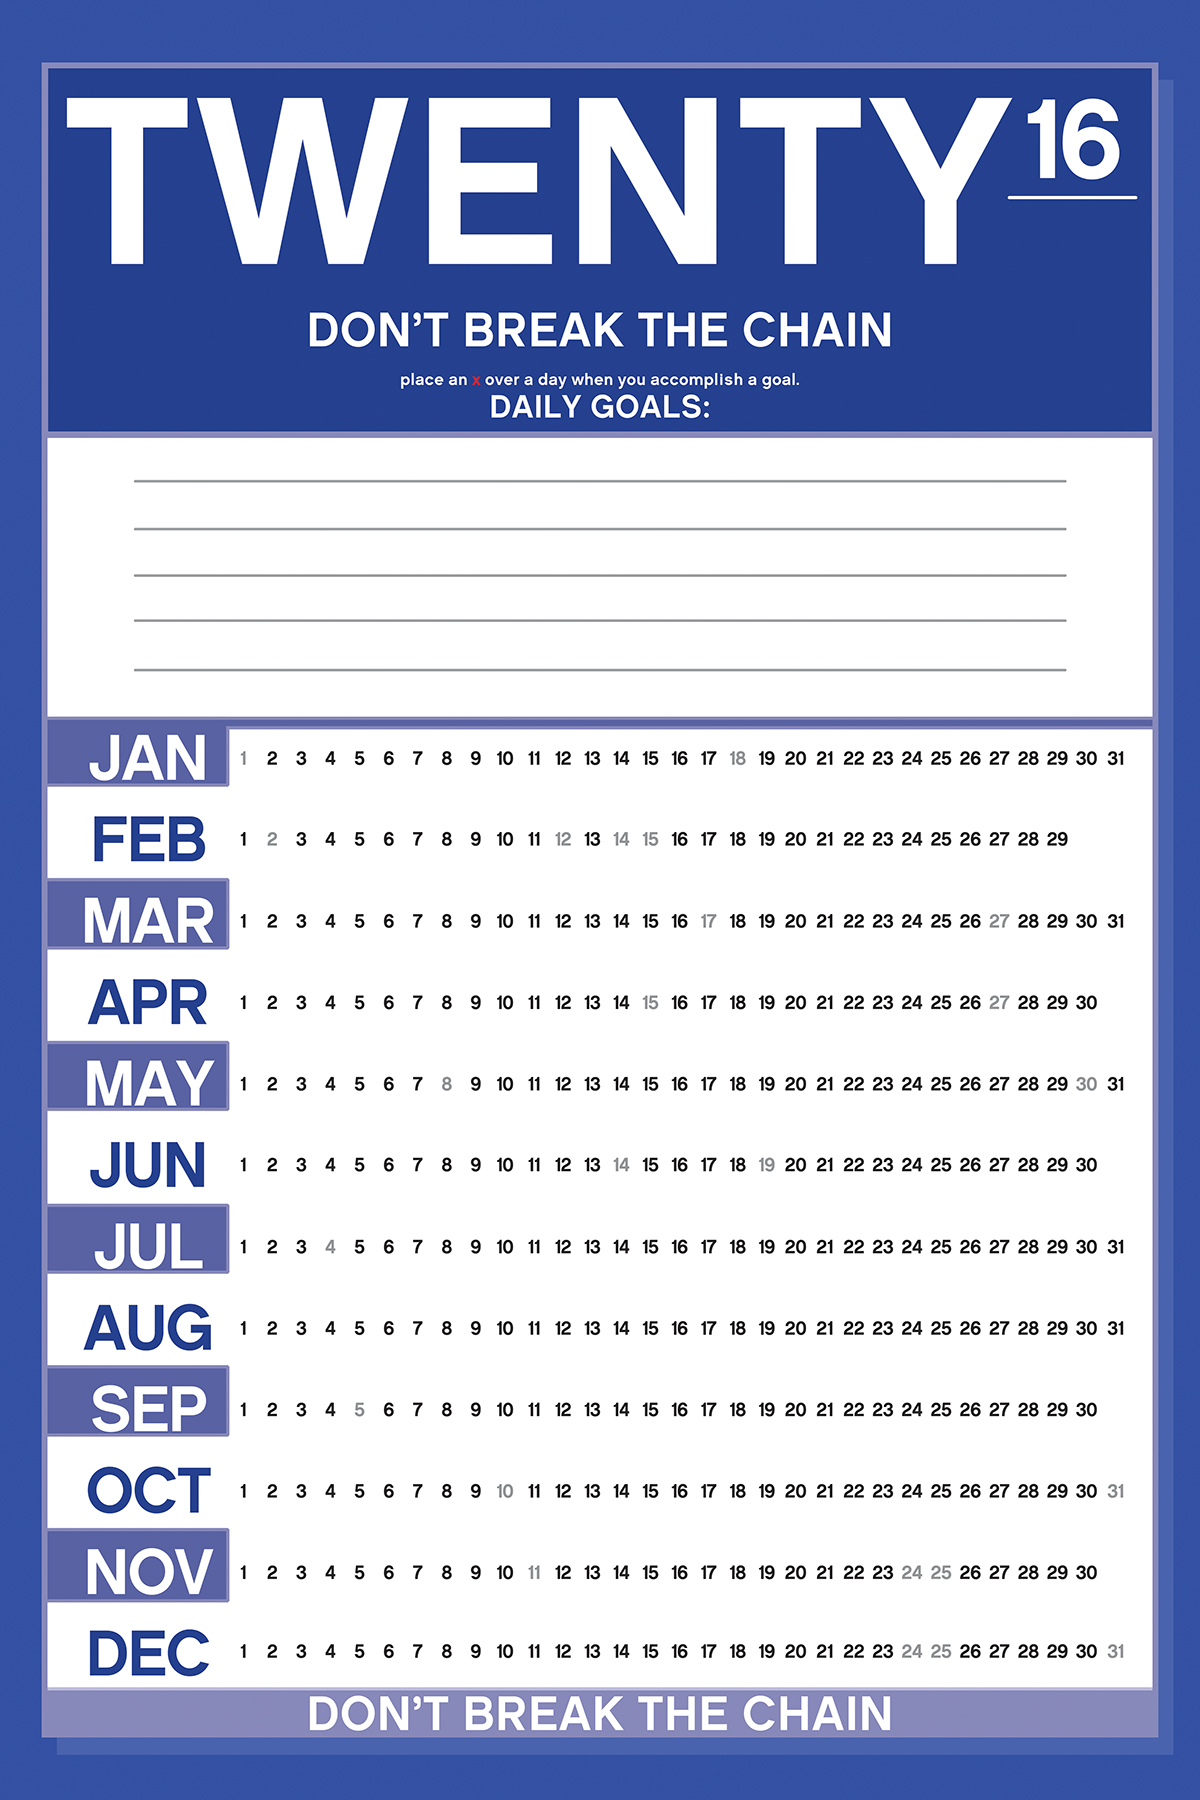 twenty Sixteen don't break the chain calendar Productivity Goals